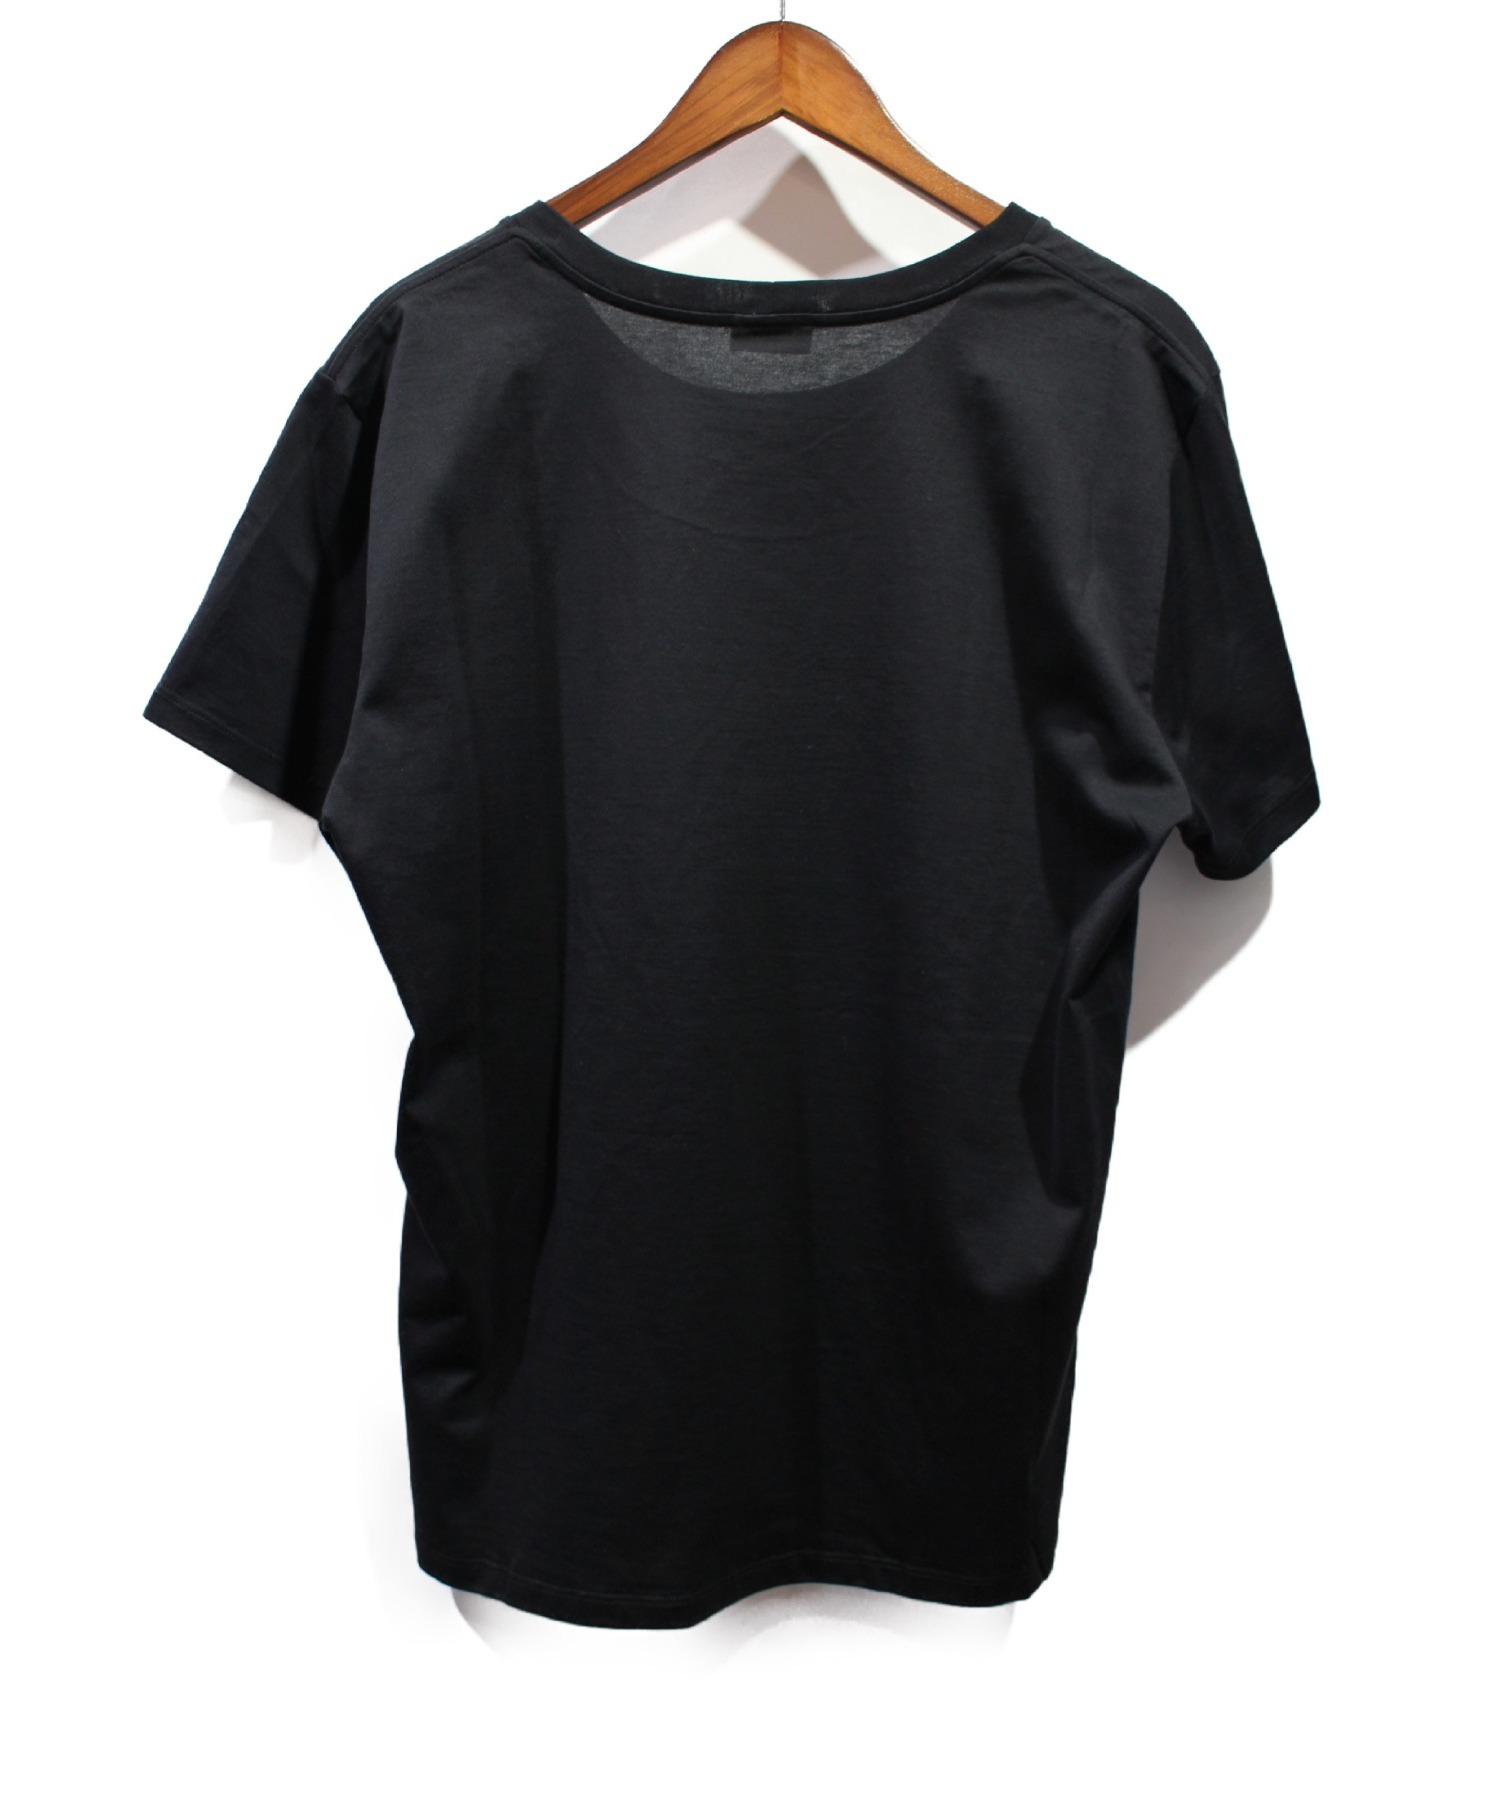 CELINE Tシャツ ラビリンスロゴ　XS